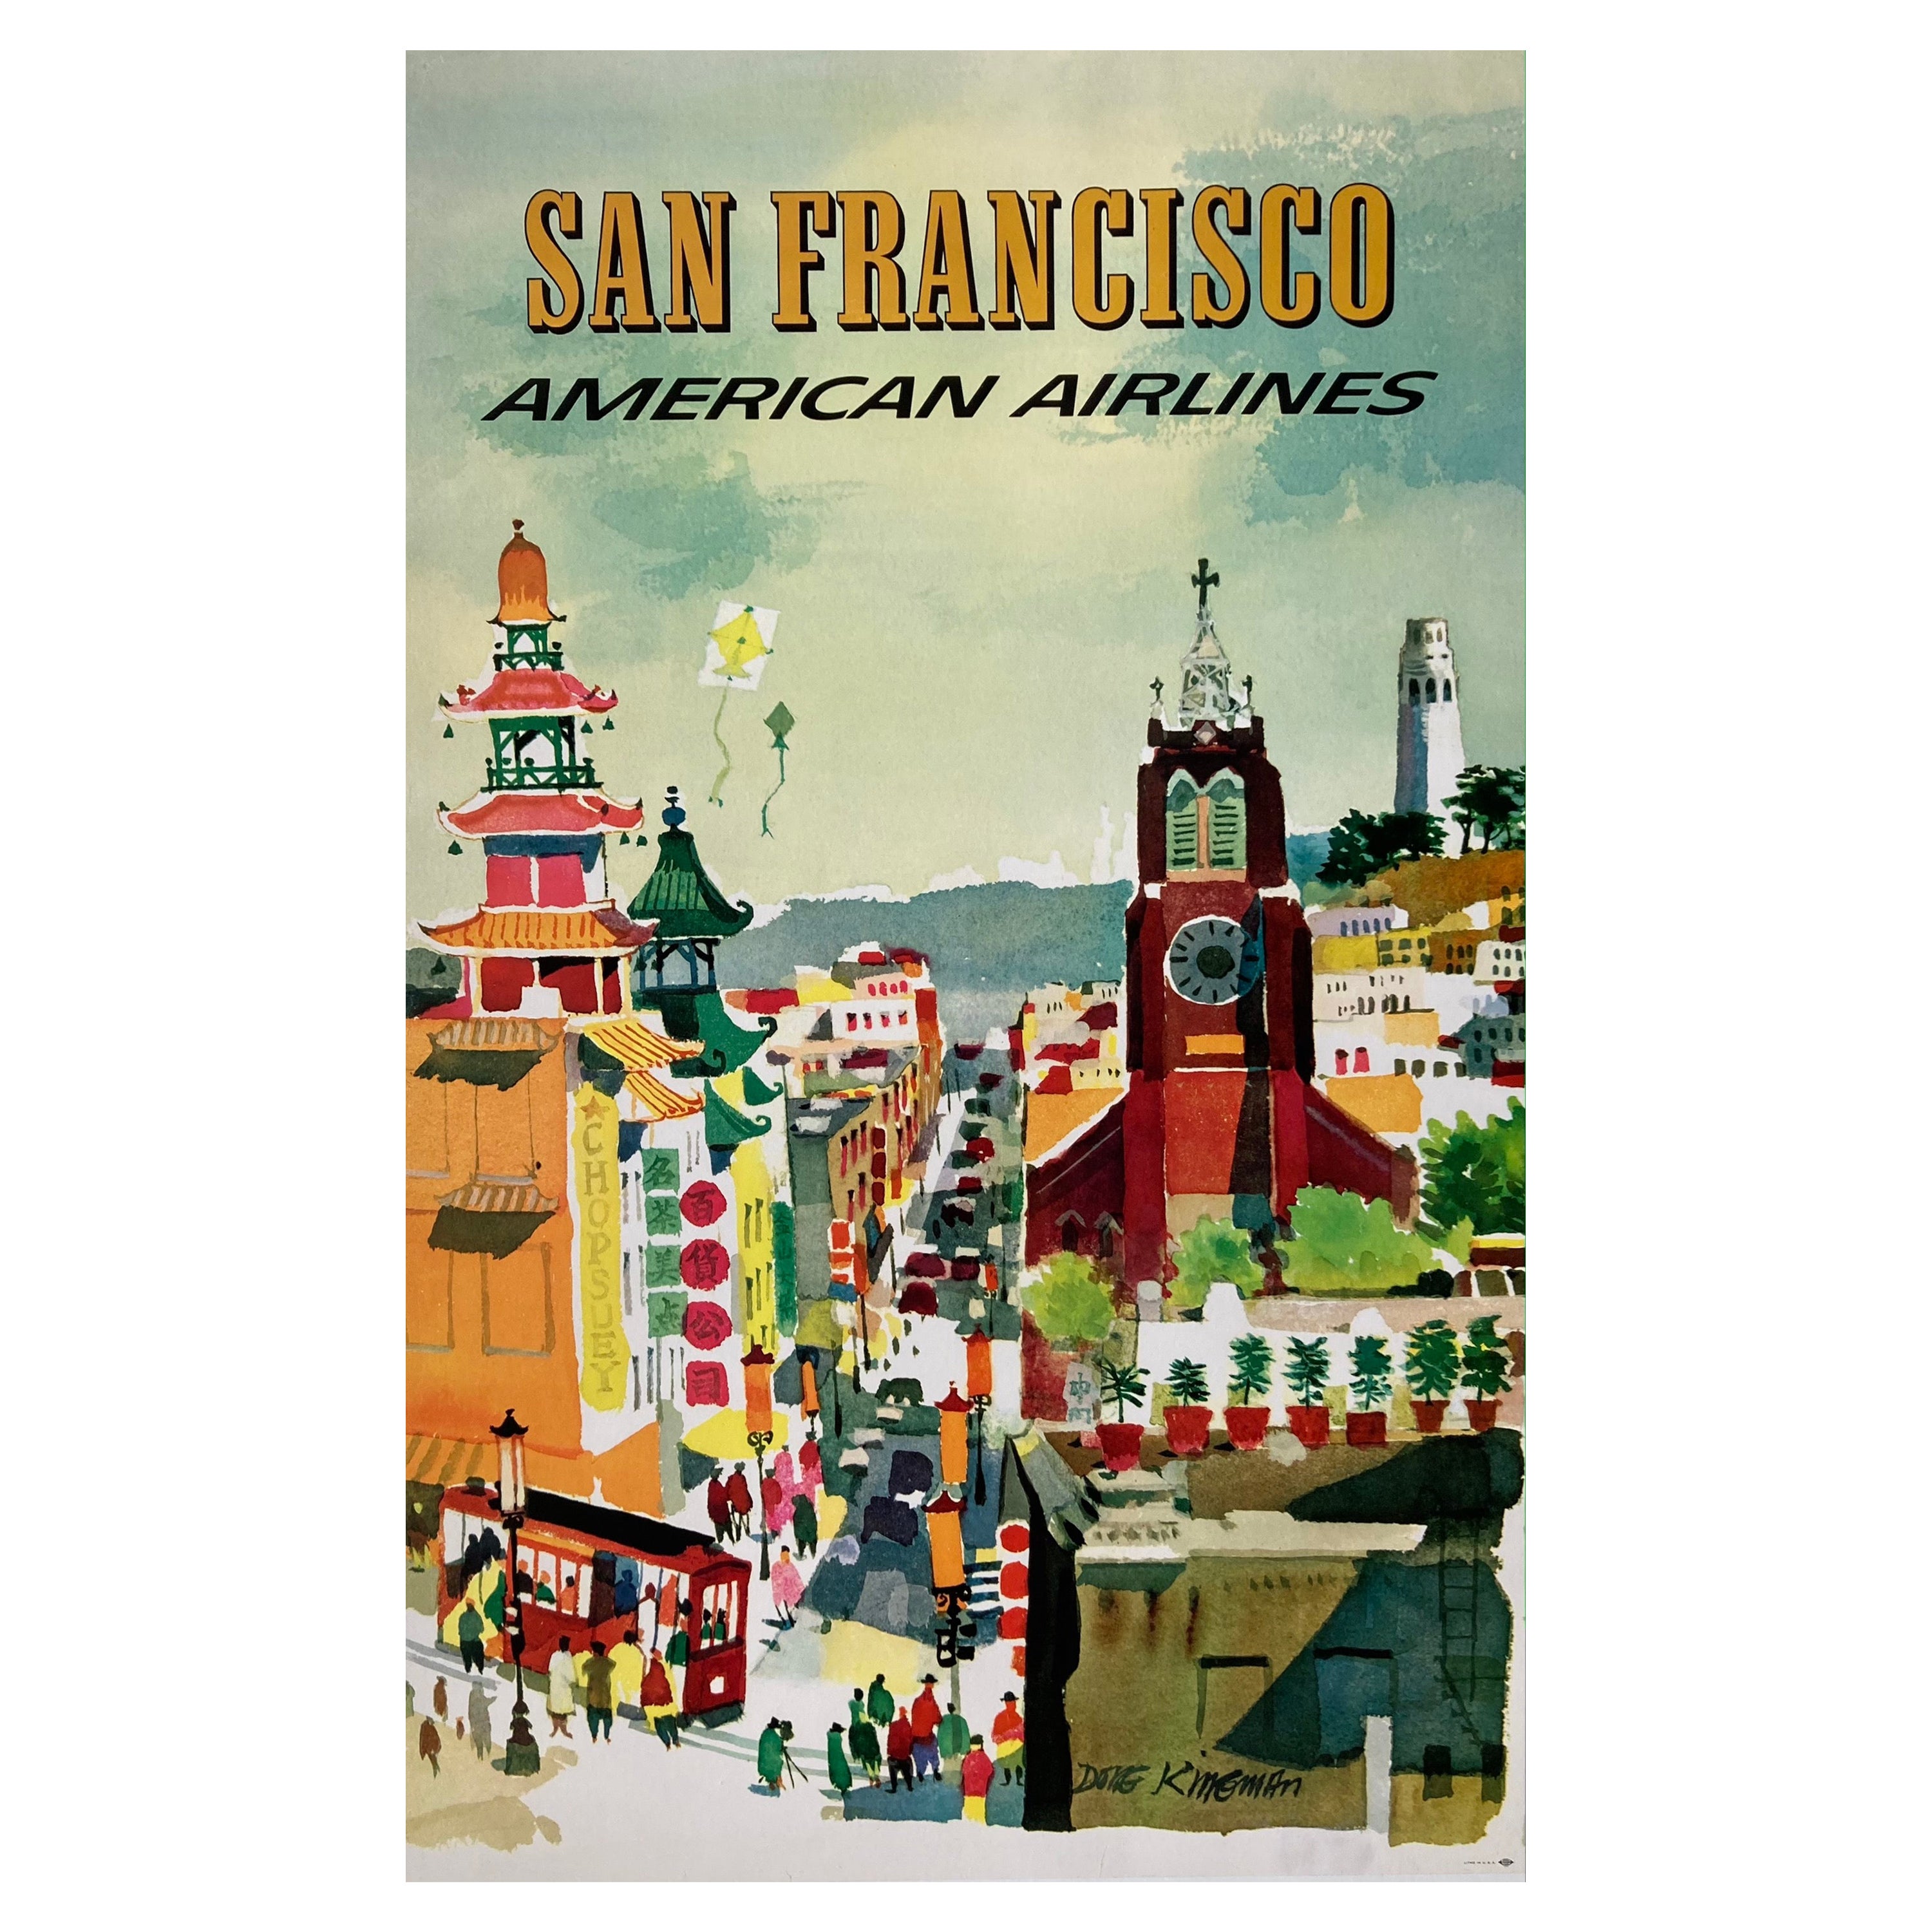 Original American Airlines San Francisco Travel Poster, Dong Kingman